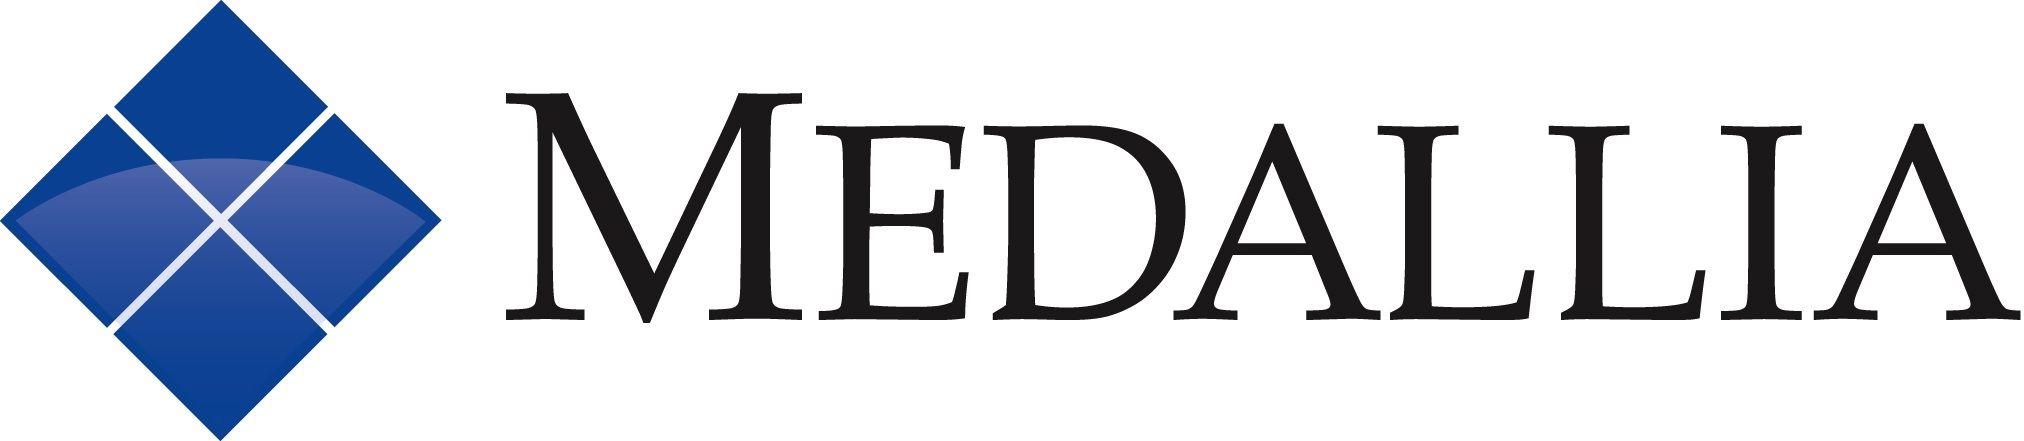 Medallia Logo - Medallia Logos